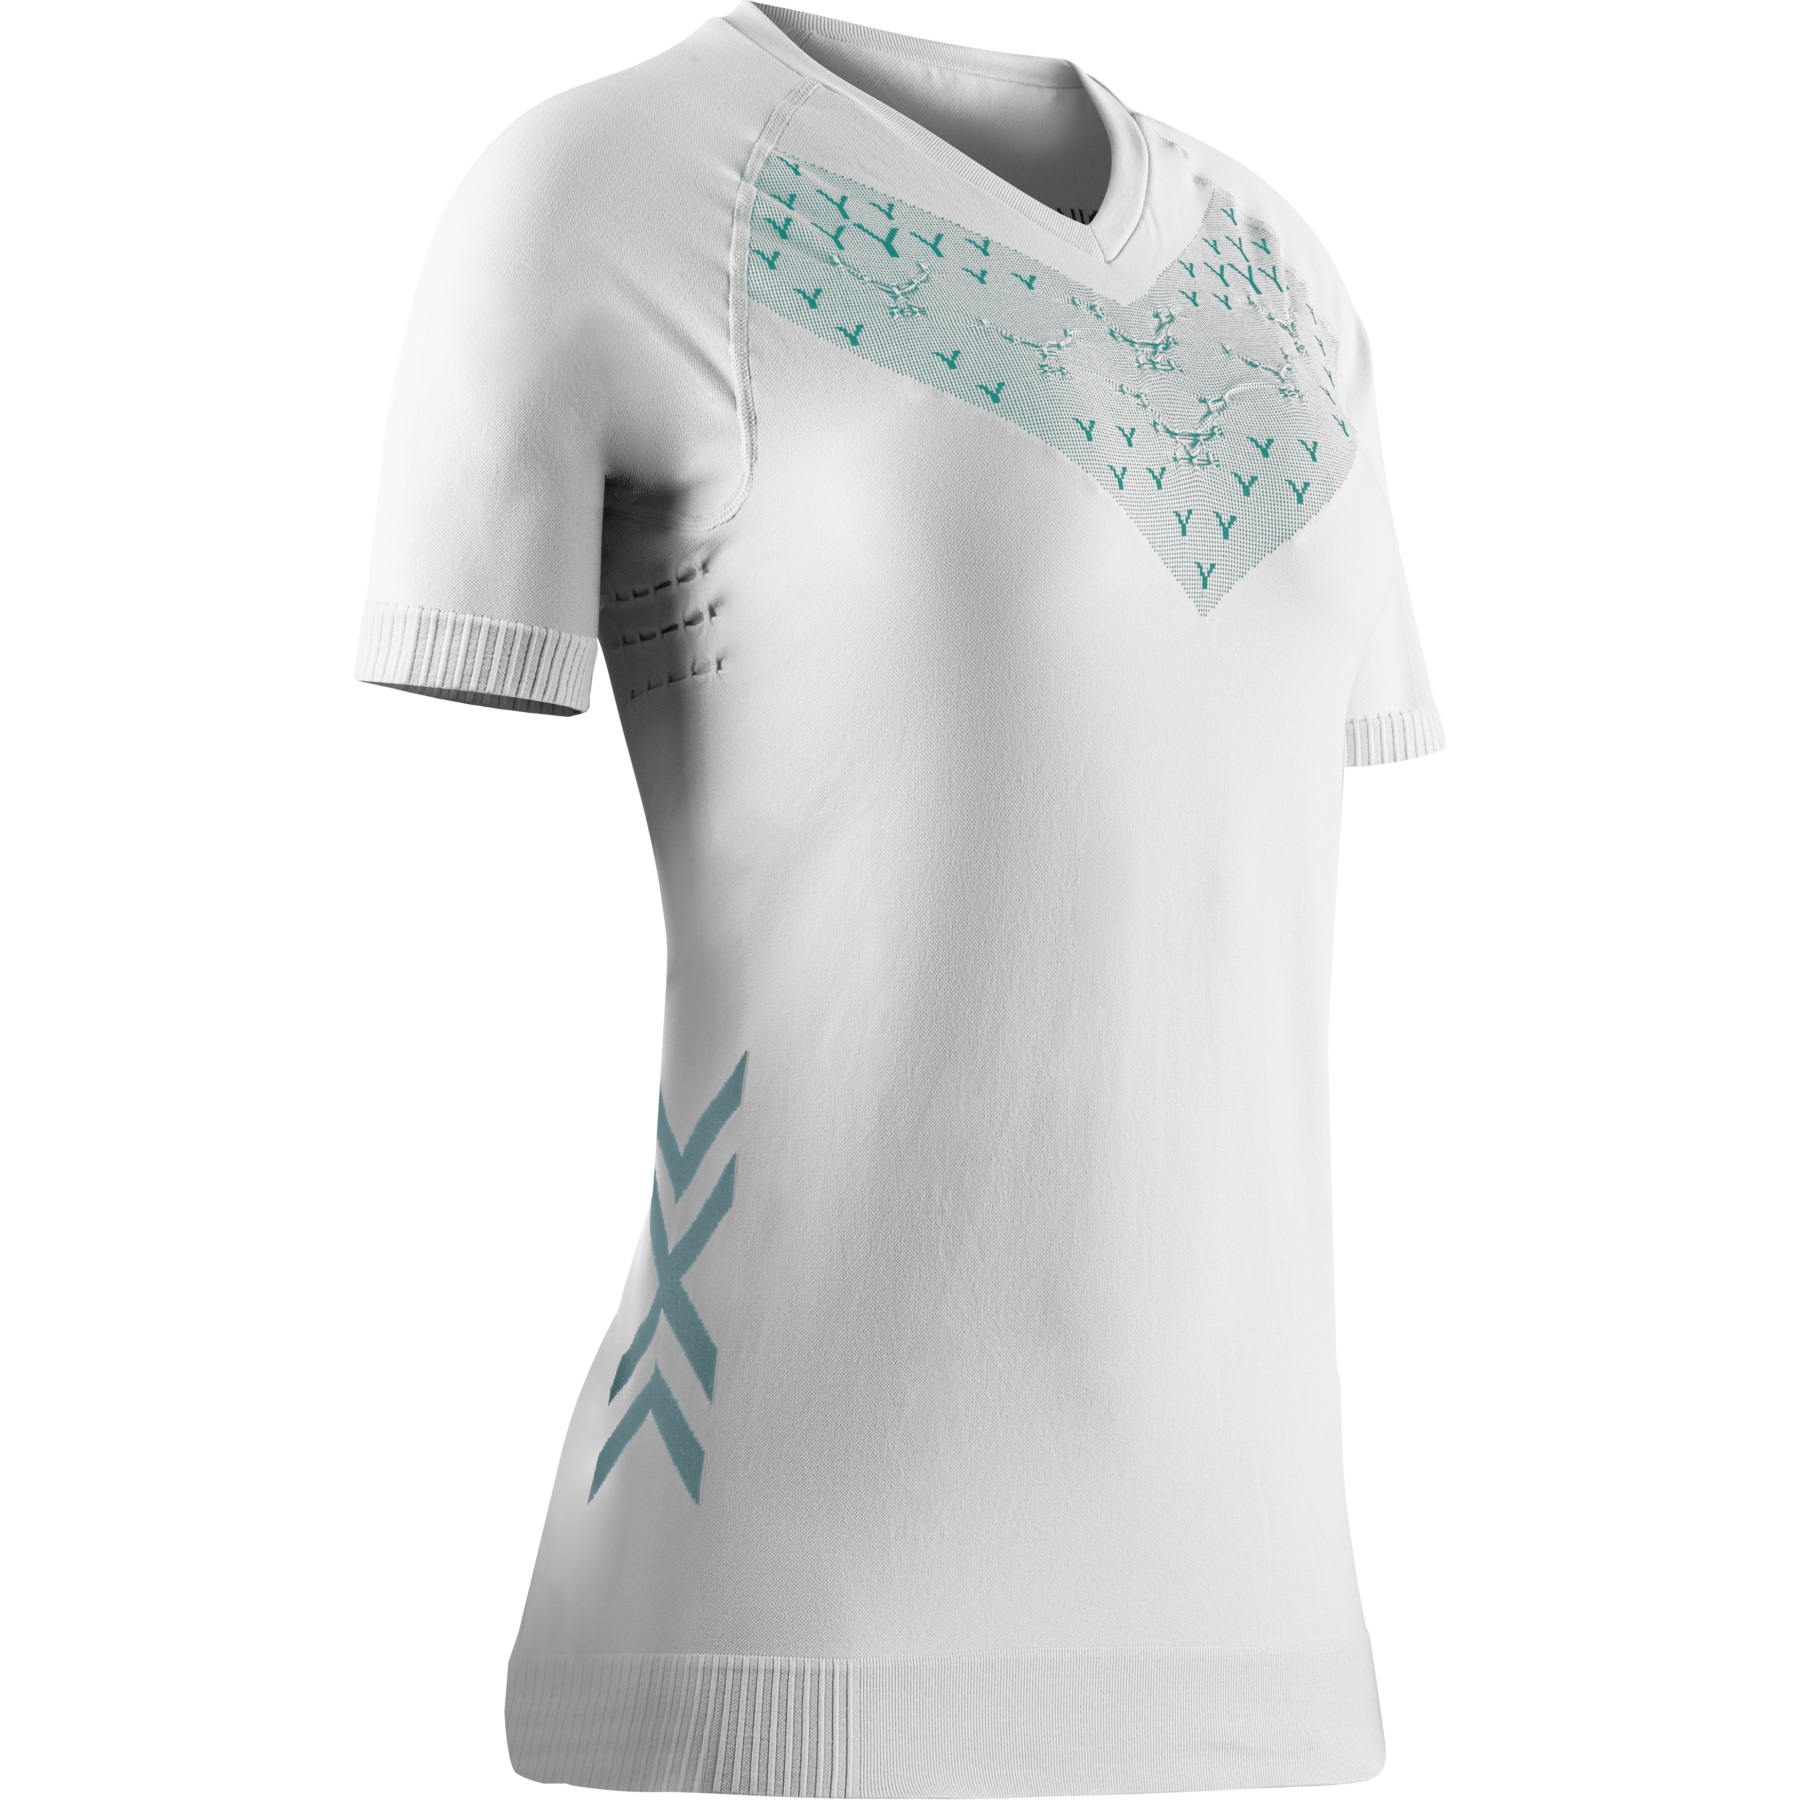 Picture of X-Bionic Twyce Run Short Sleeve Shirt Women - white/clearwater